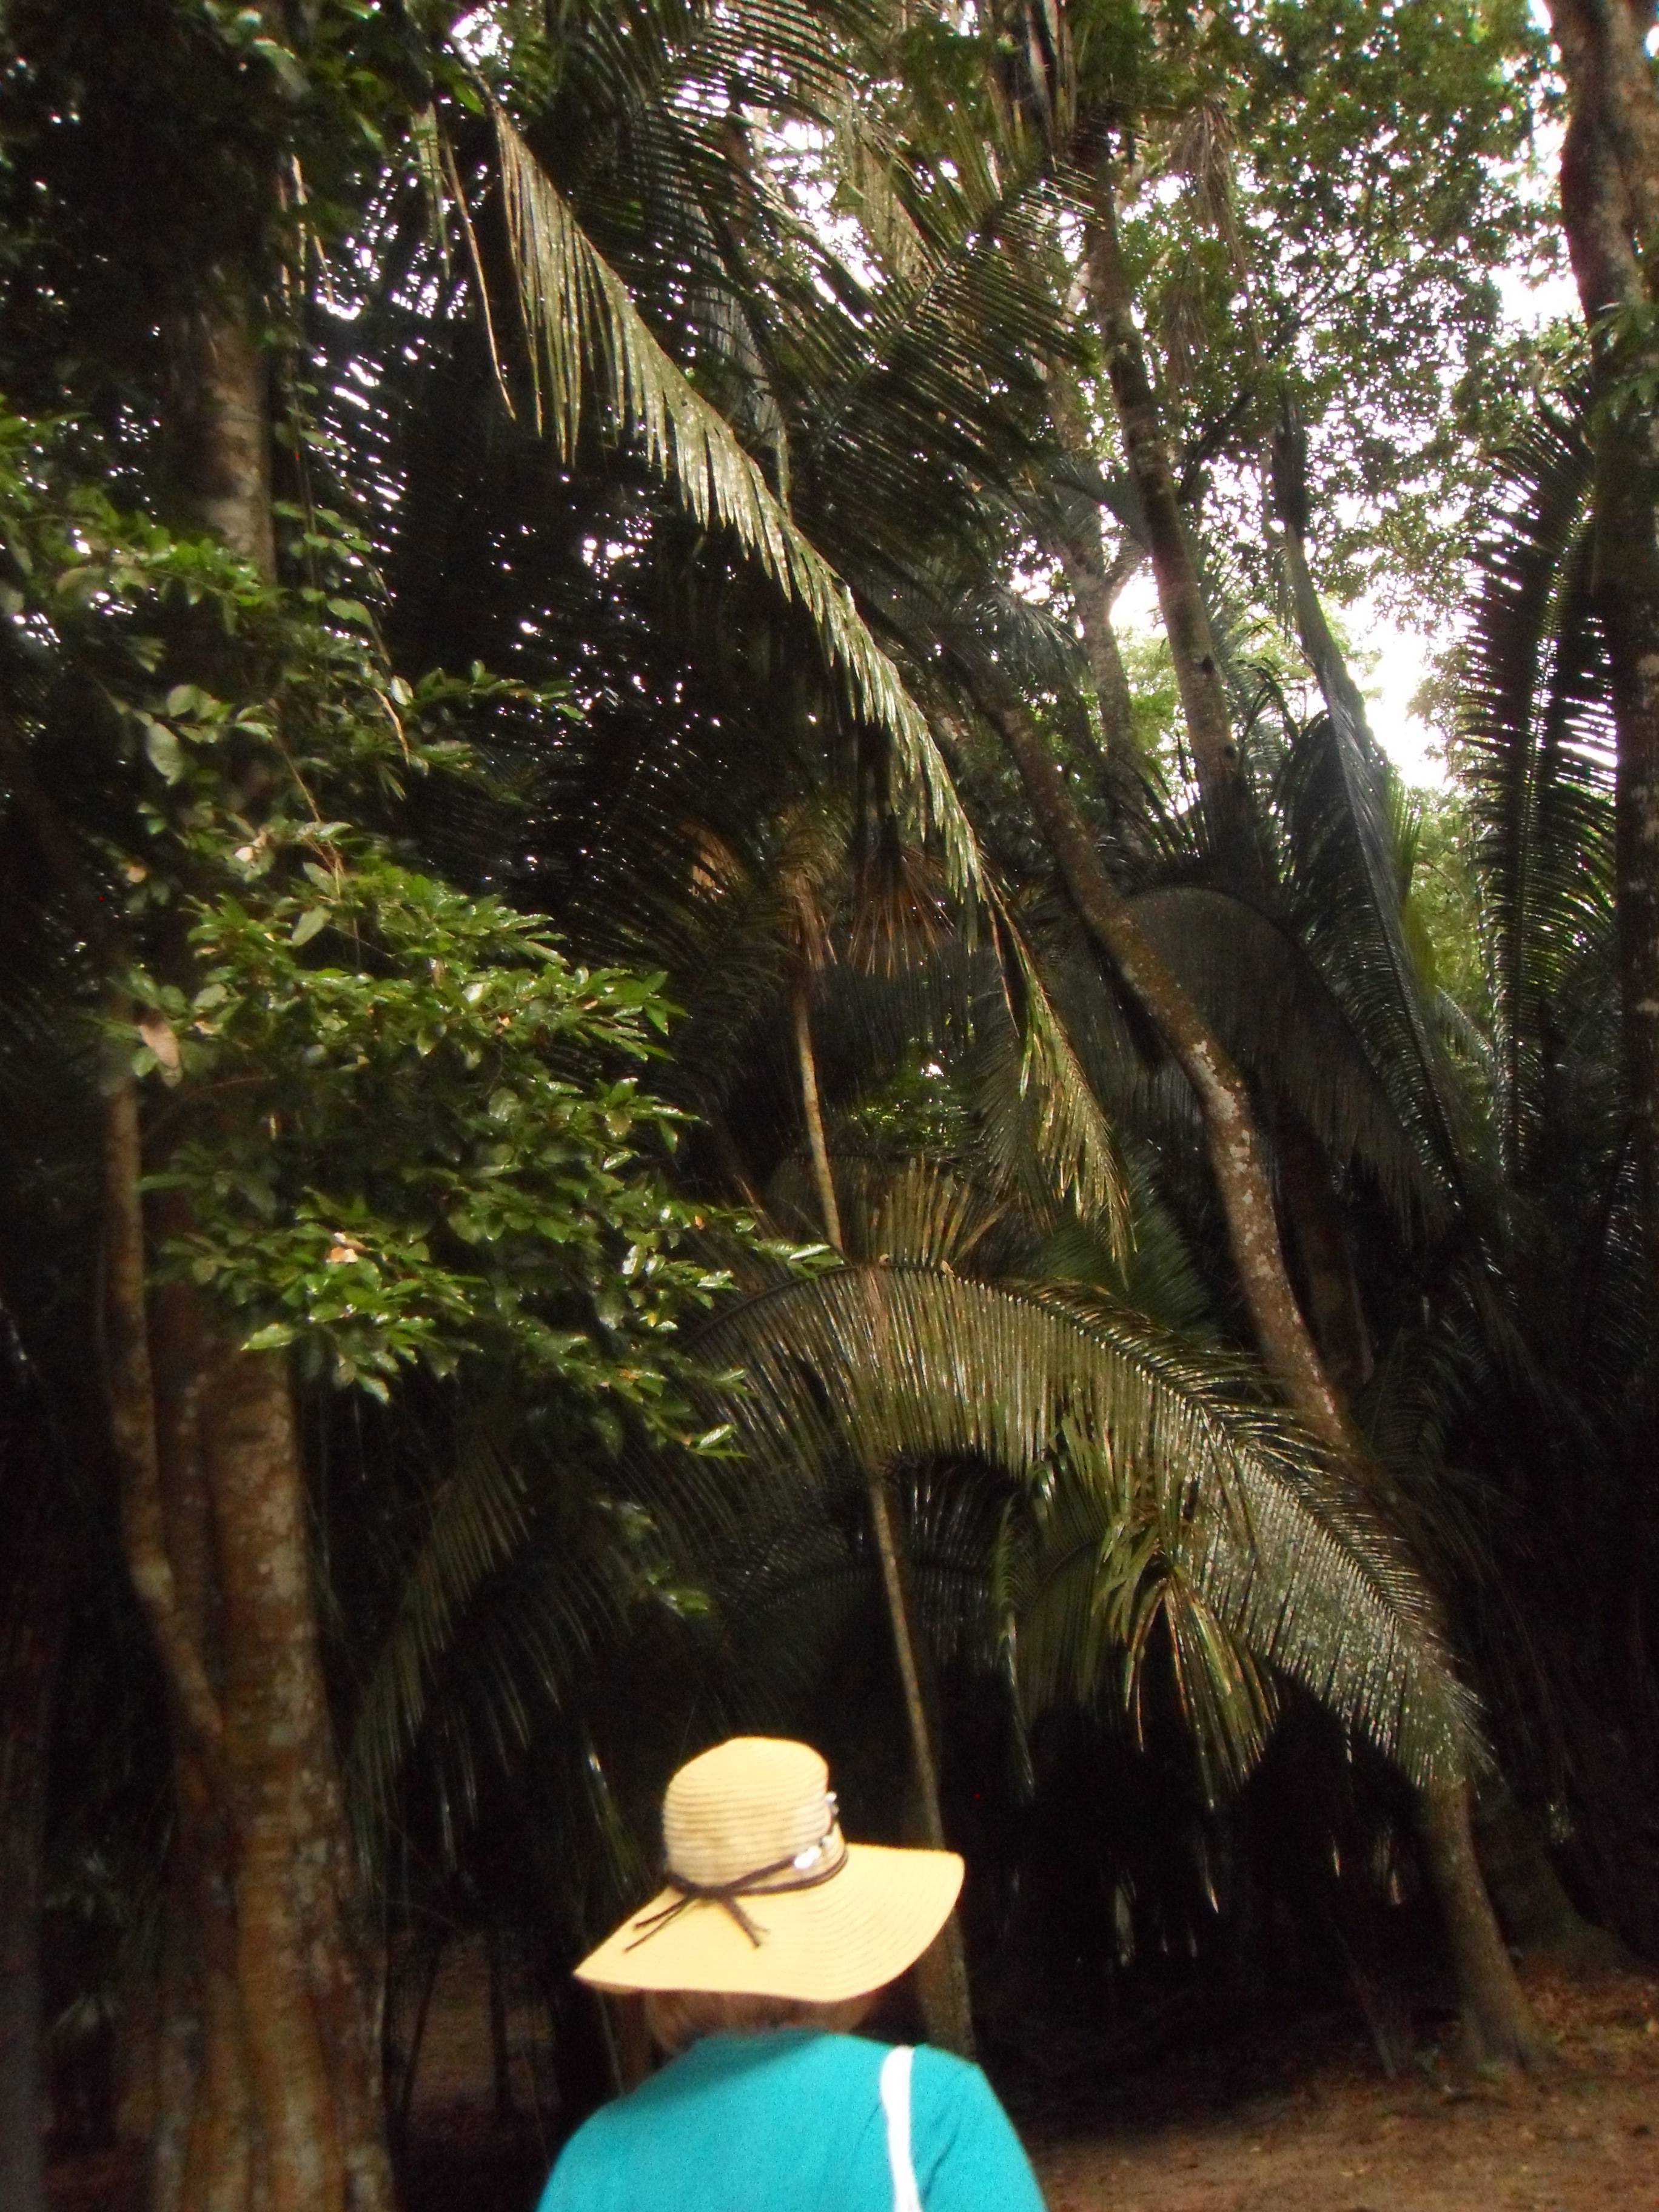 The Rain Forest surrounding the Mayan Pyramids, Lamanai, Belize